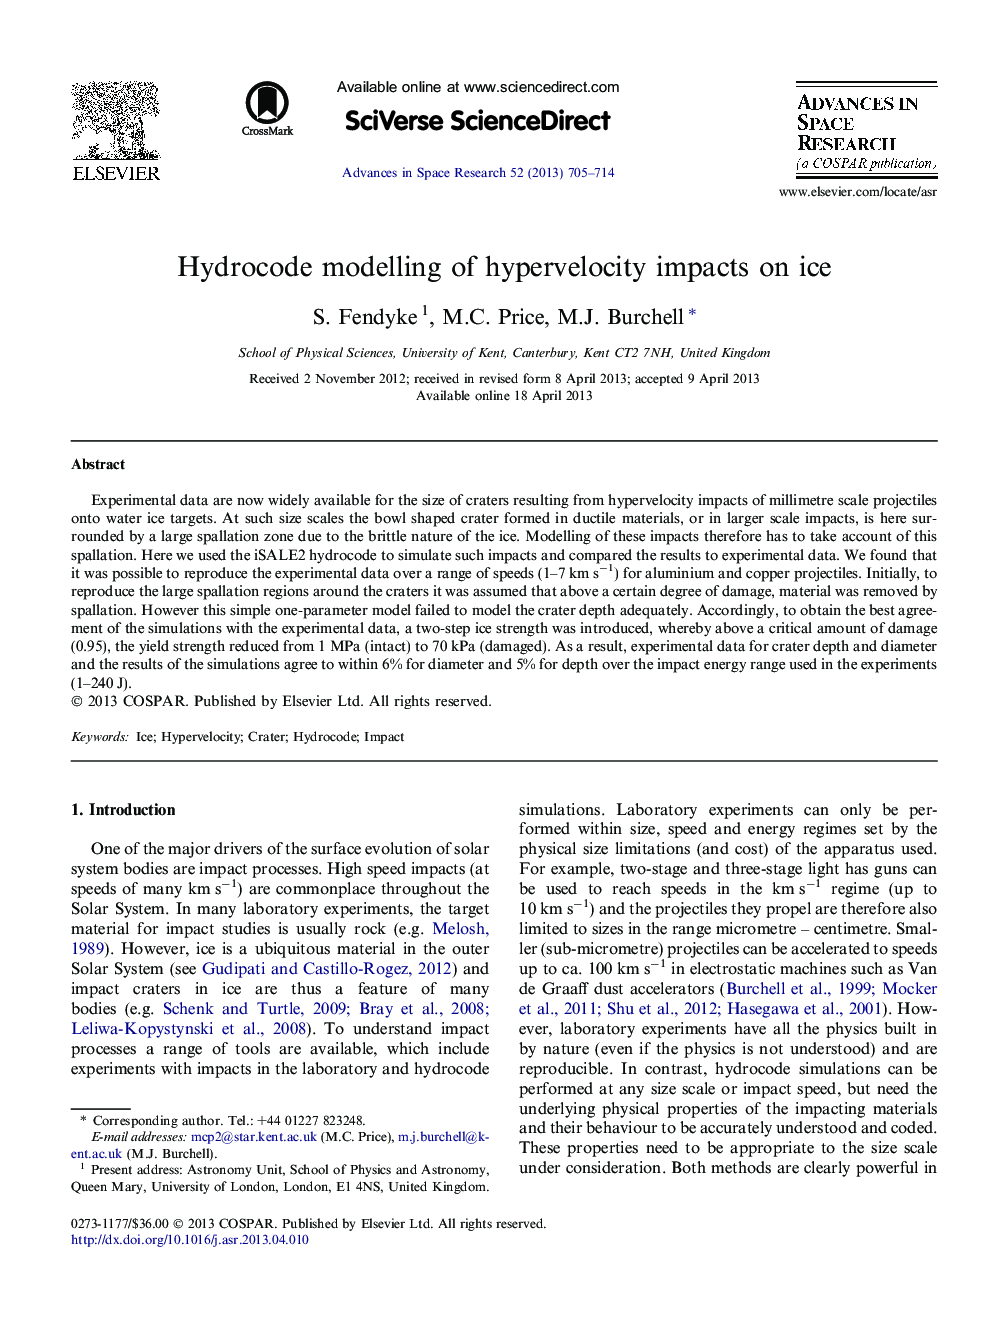 Hydrocode modelling of hypervelocity impacts on ice